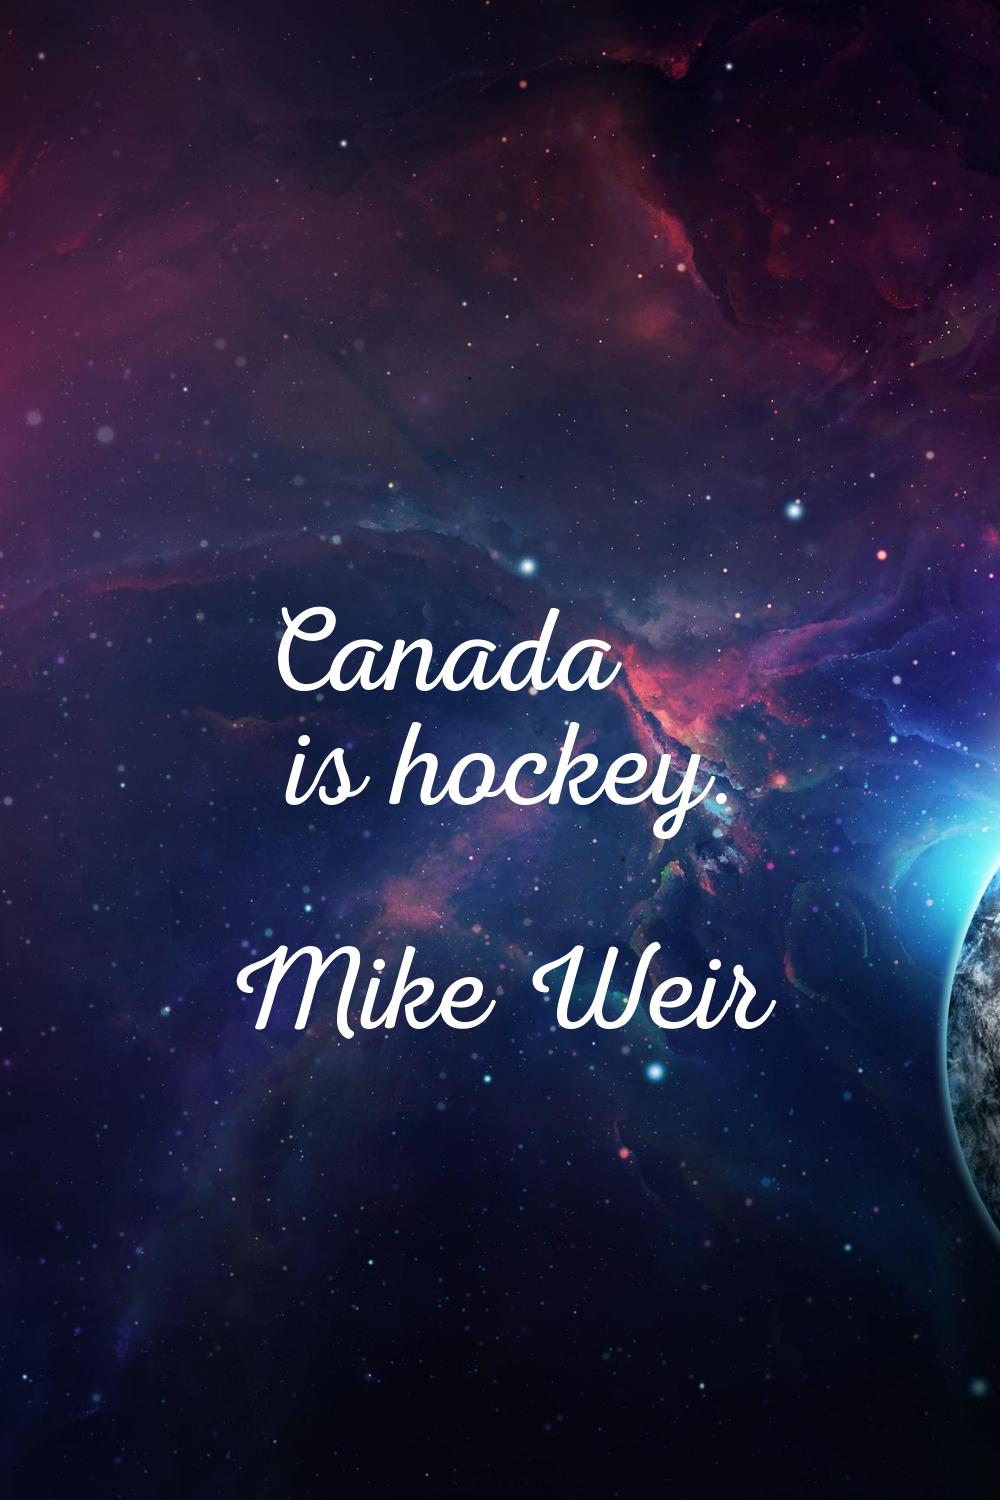 Canada is hockey.